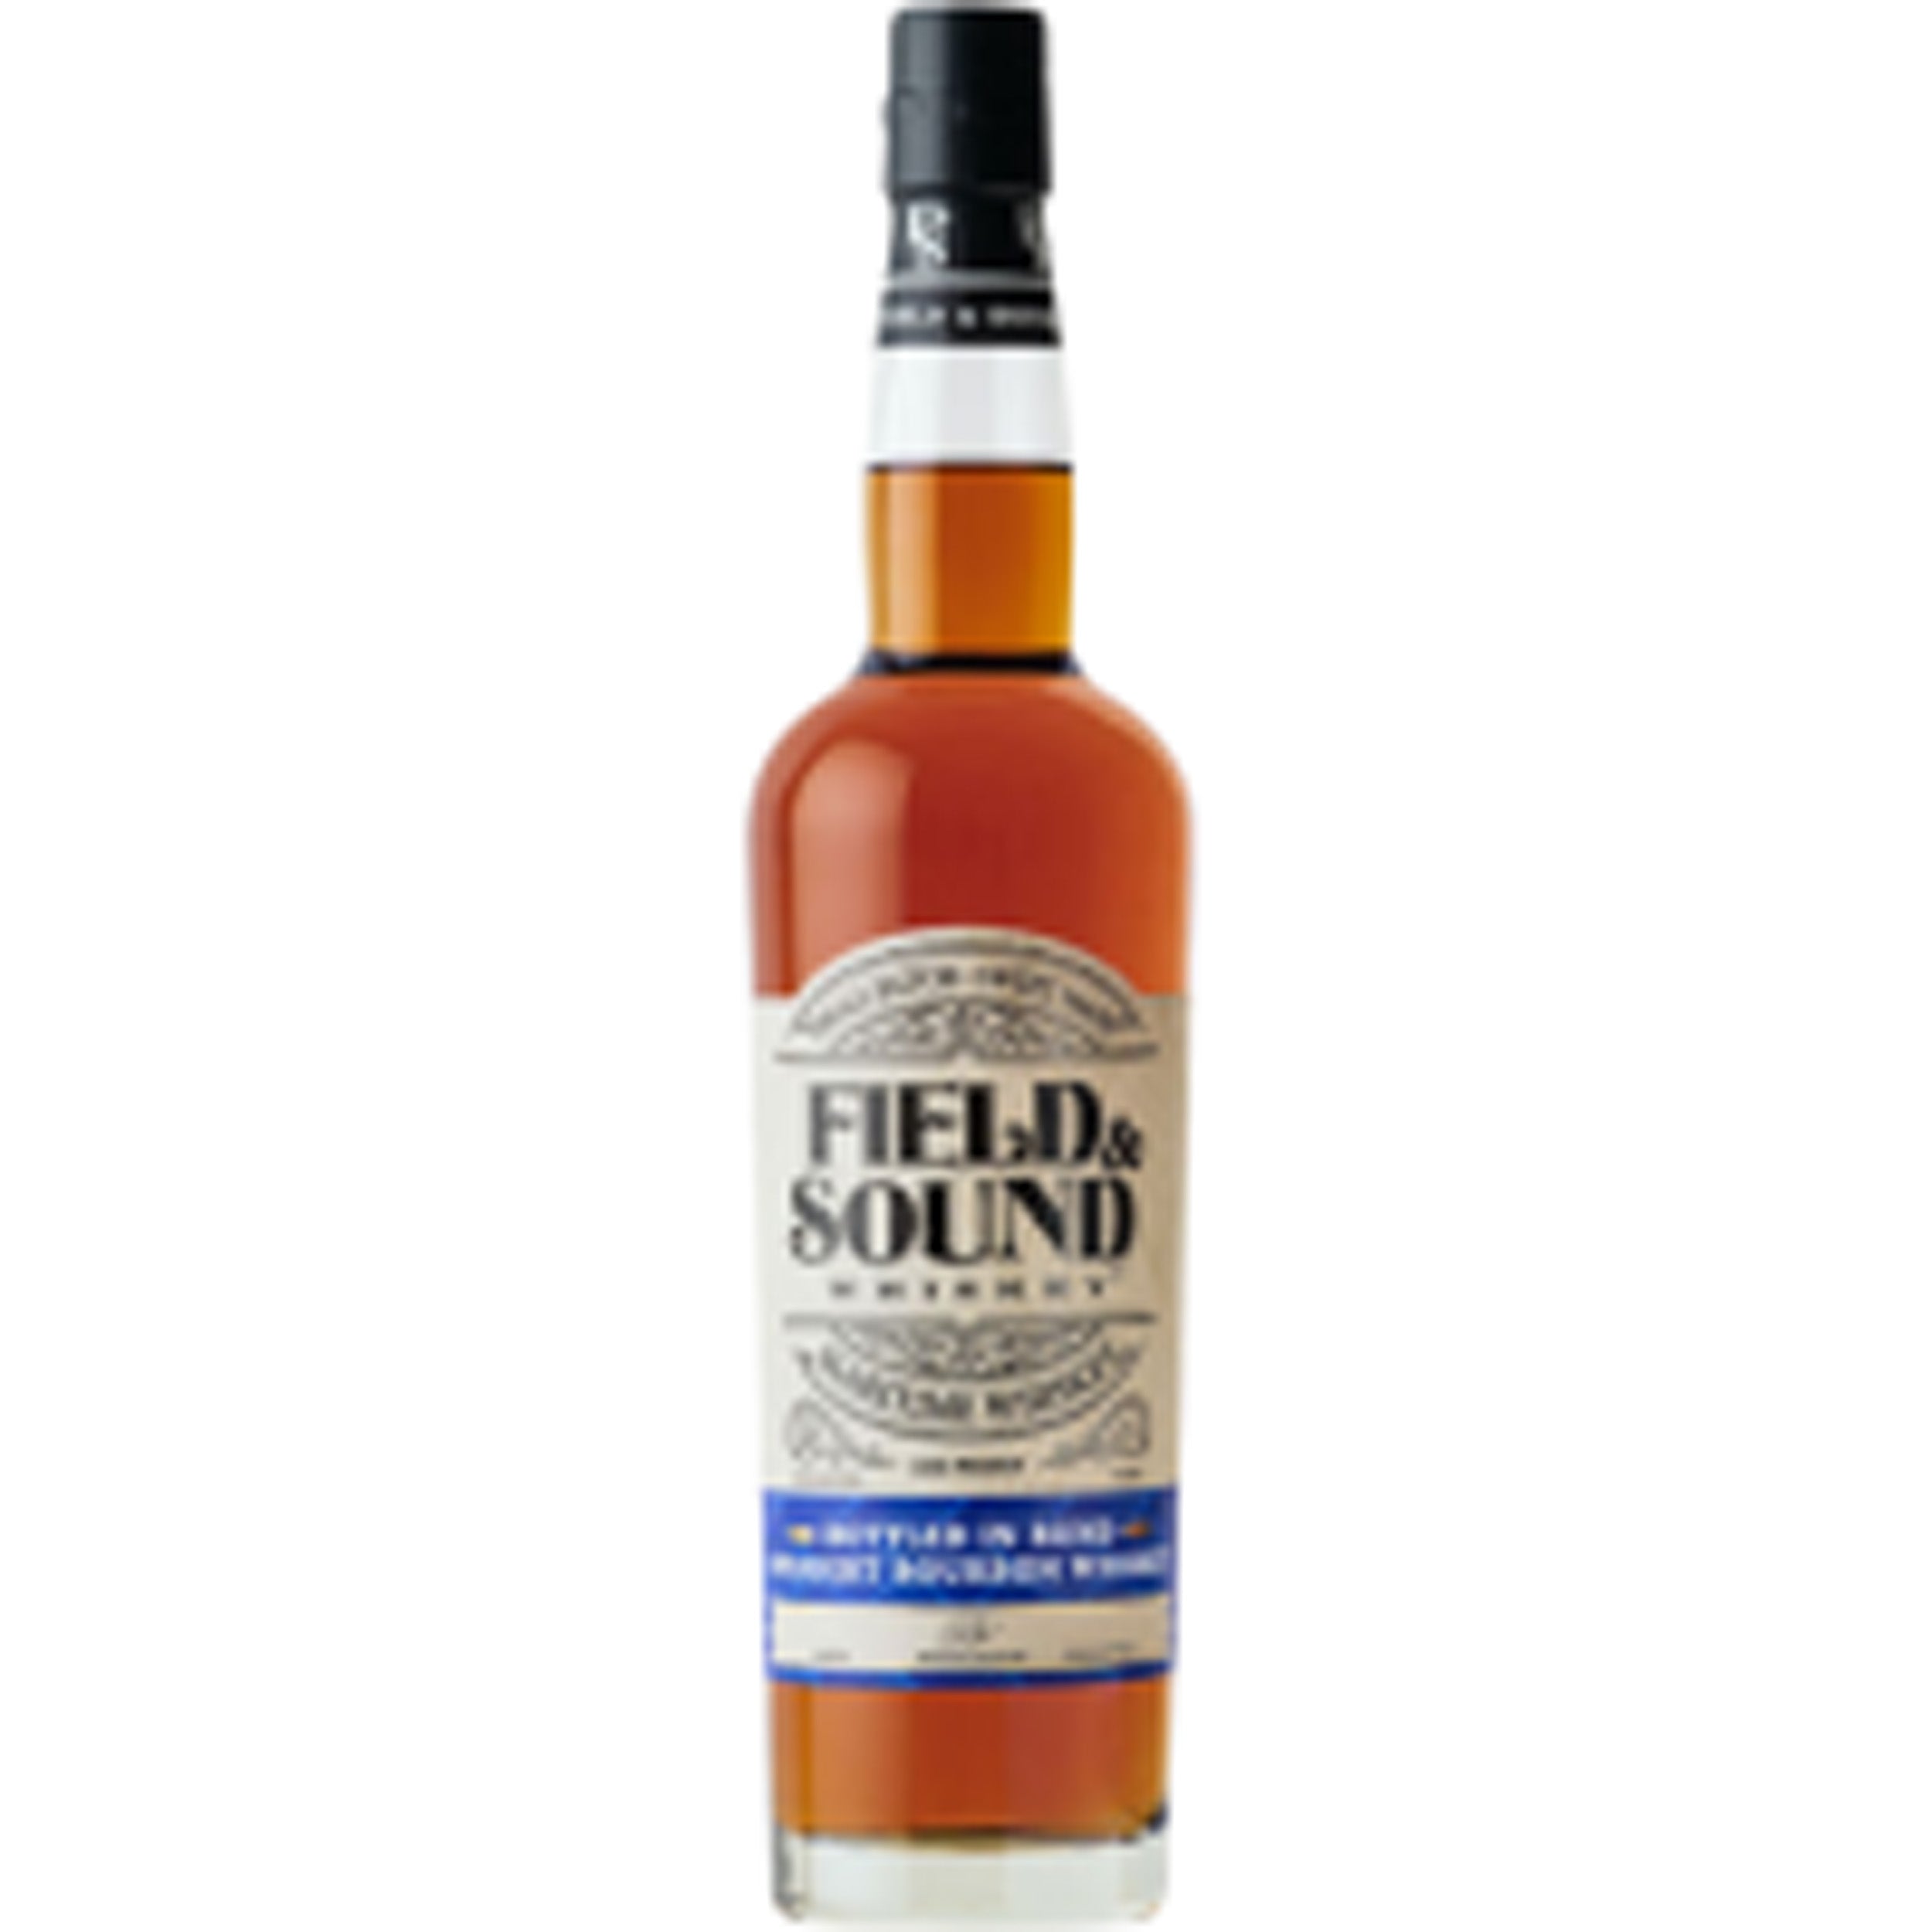 Field & Sound Batch 1 Bottled In Bond Straight Bourbon